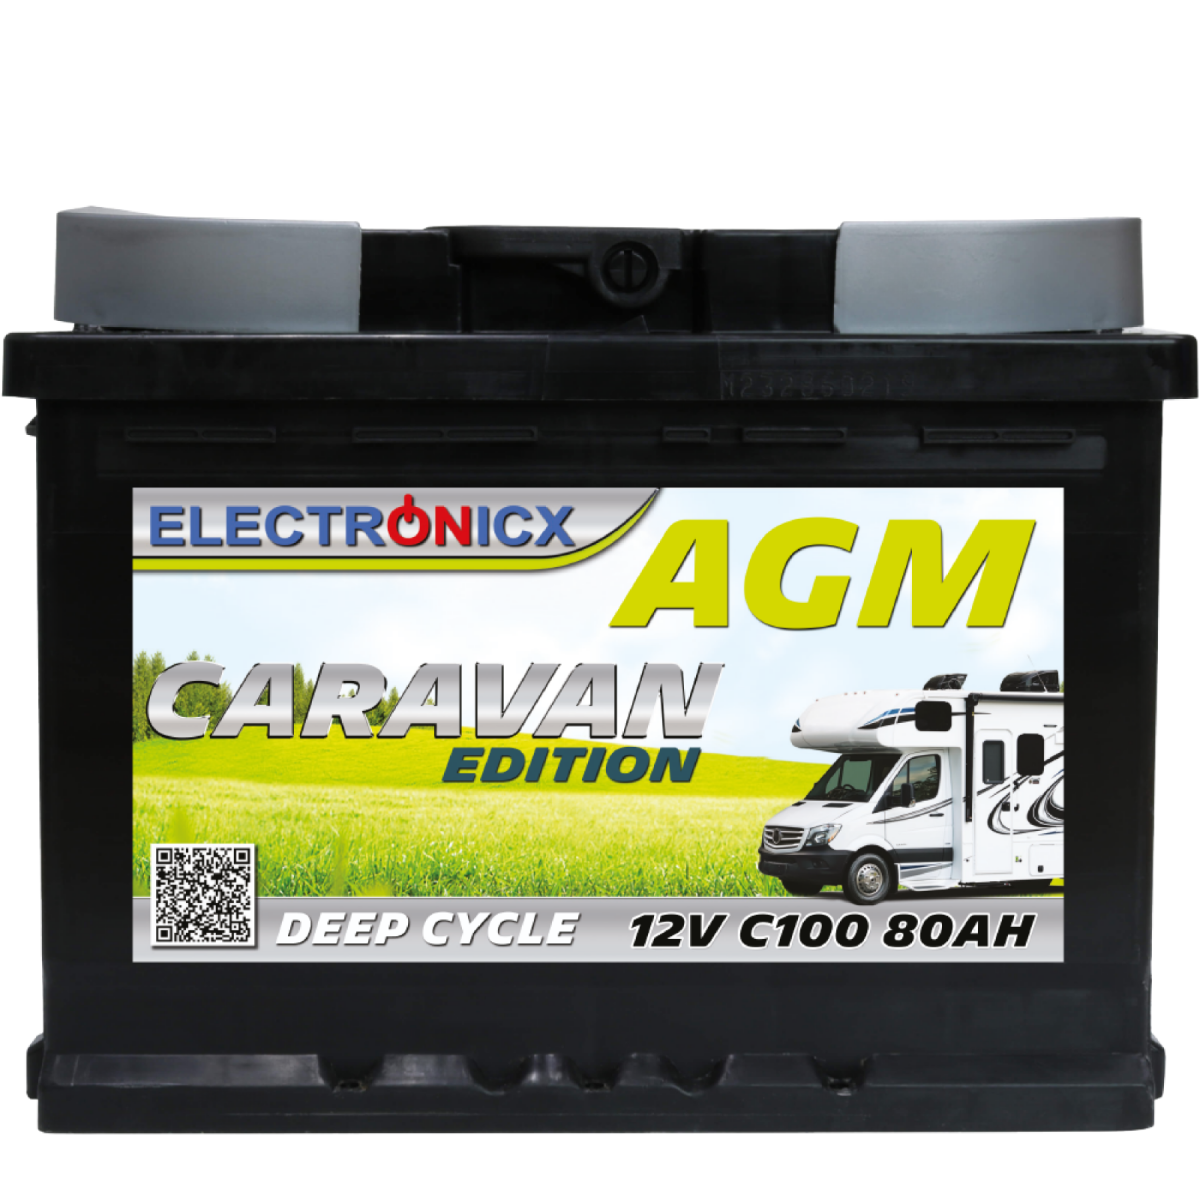 Electronicx Caravan Edition battery agm 80 ah 12v motorhome boat supply..